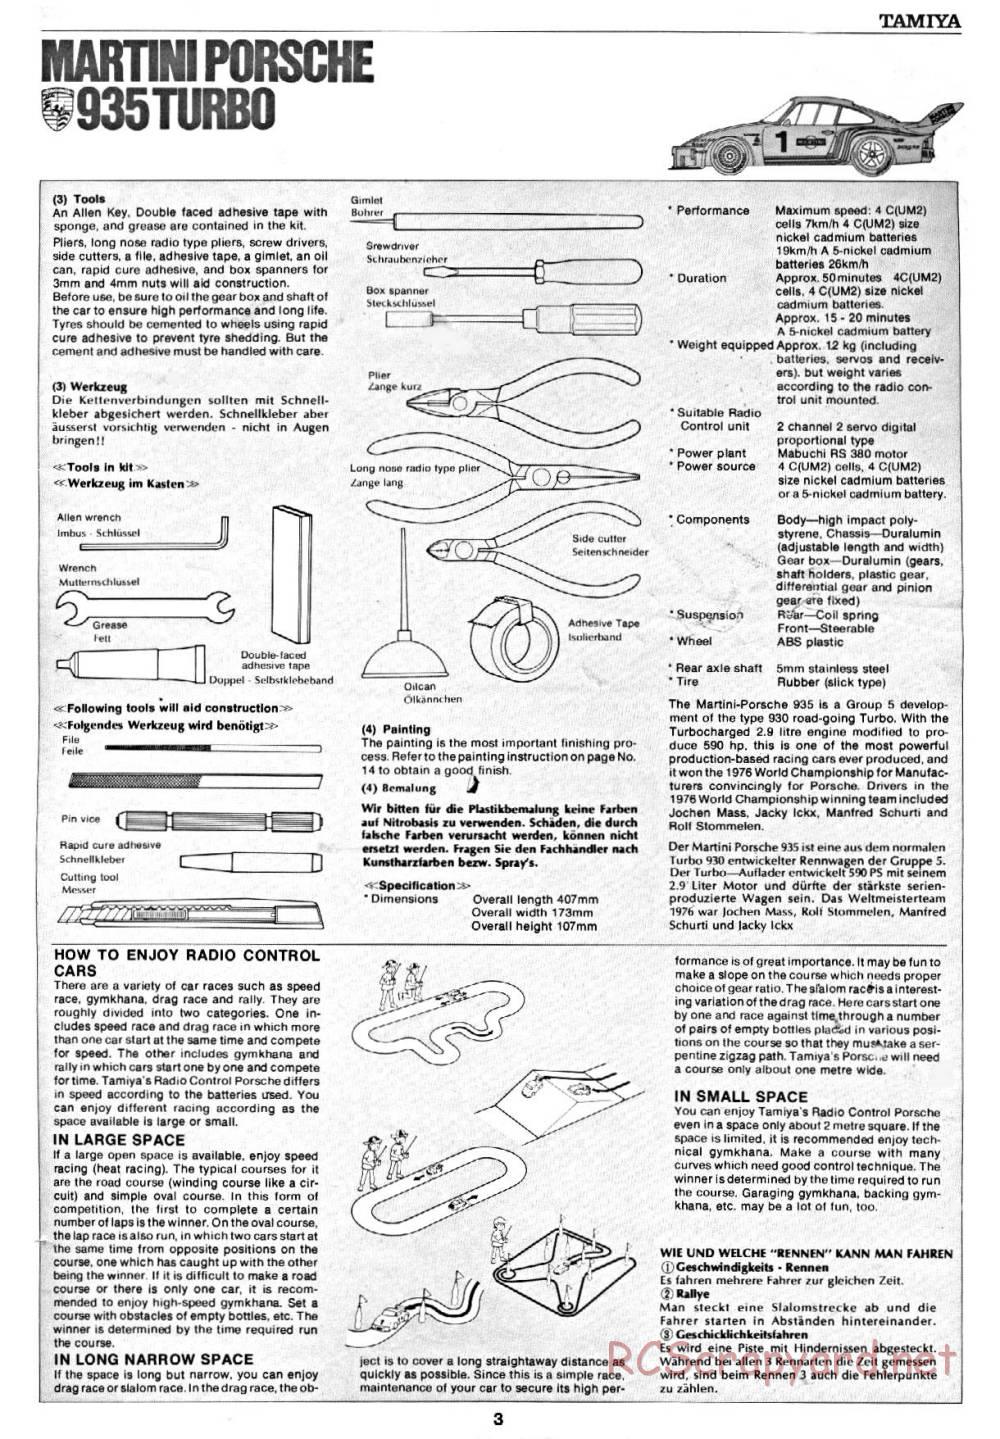 Tamiya - Martini Porsche 935 Turbo - 58002 - Manual - Page 3